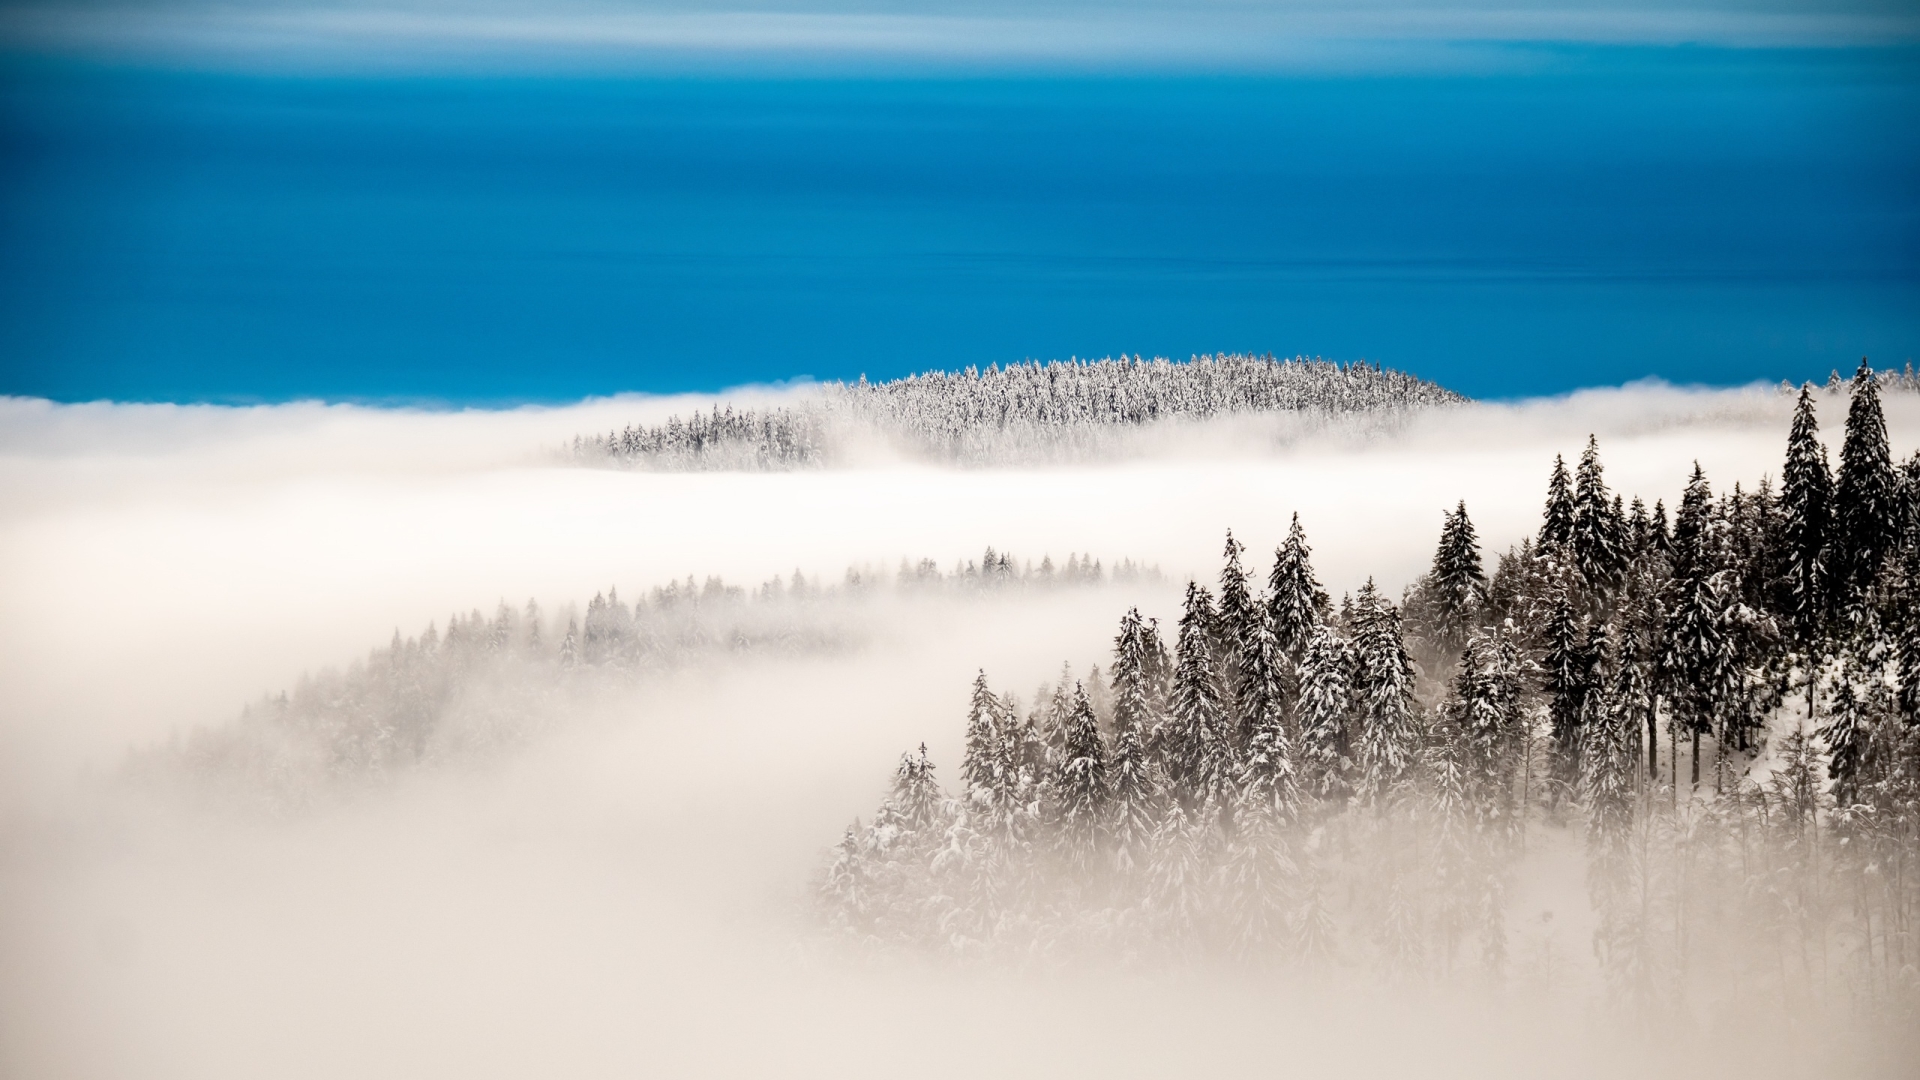 General 1920x1080 landscape winter snow nature trees pine trees mist sky